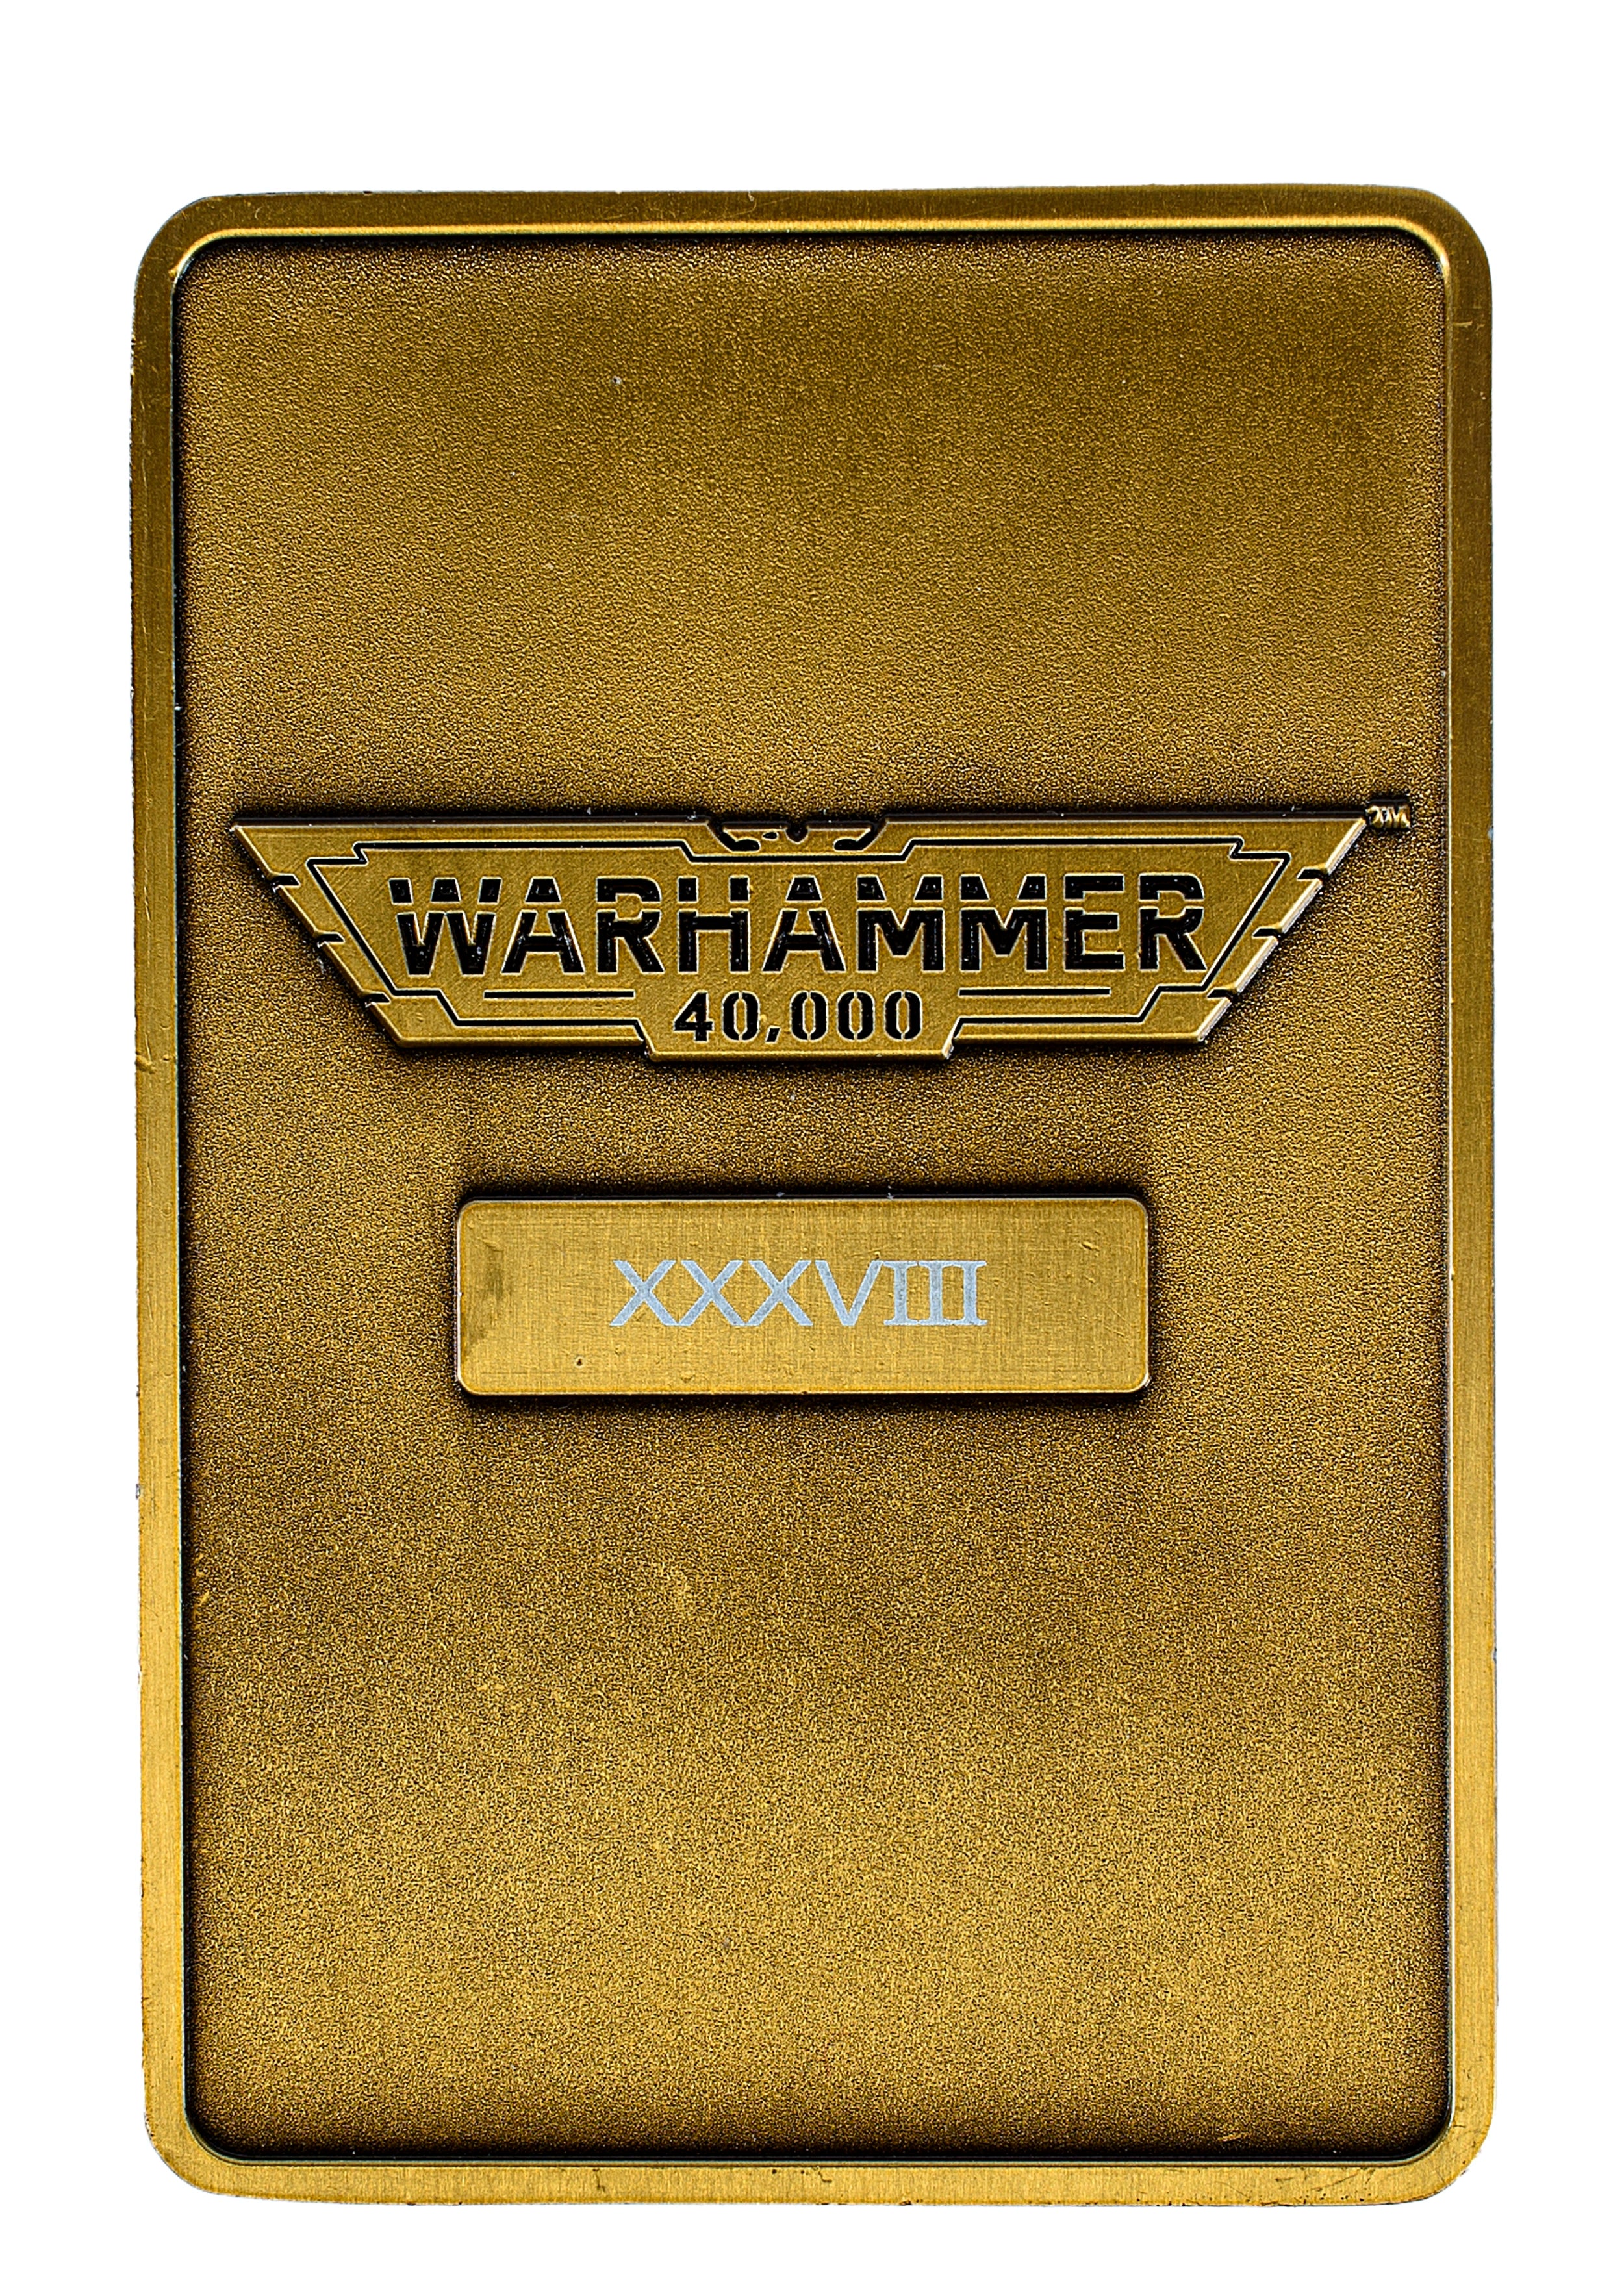 Warhammer: The Emperor Ingot [PRE ORDER] - Loaded Dice